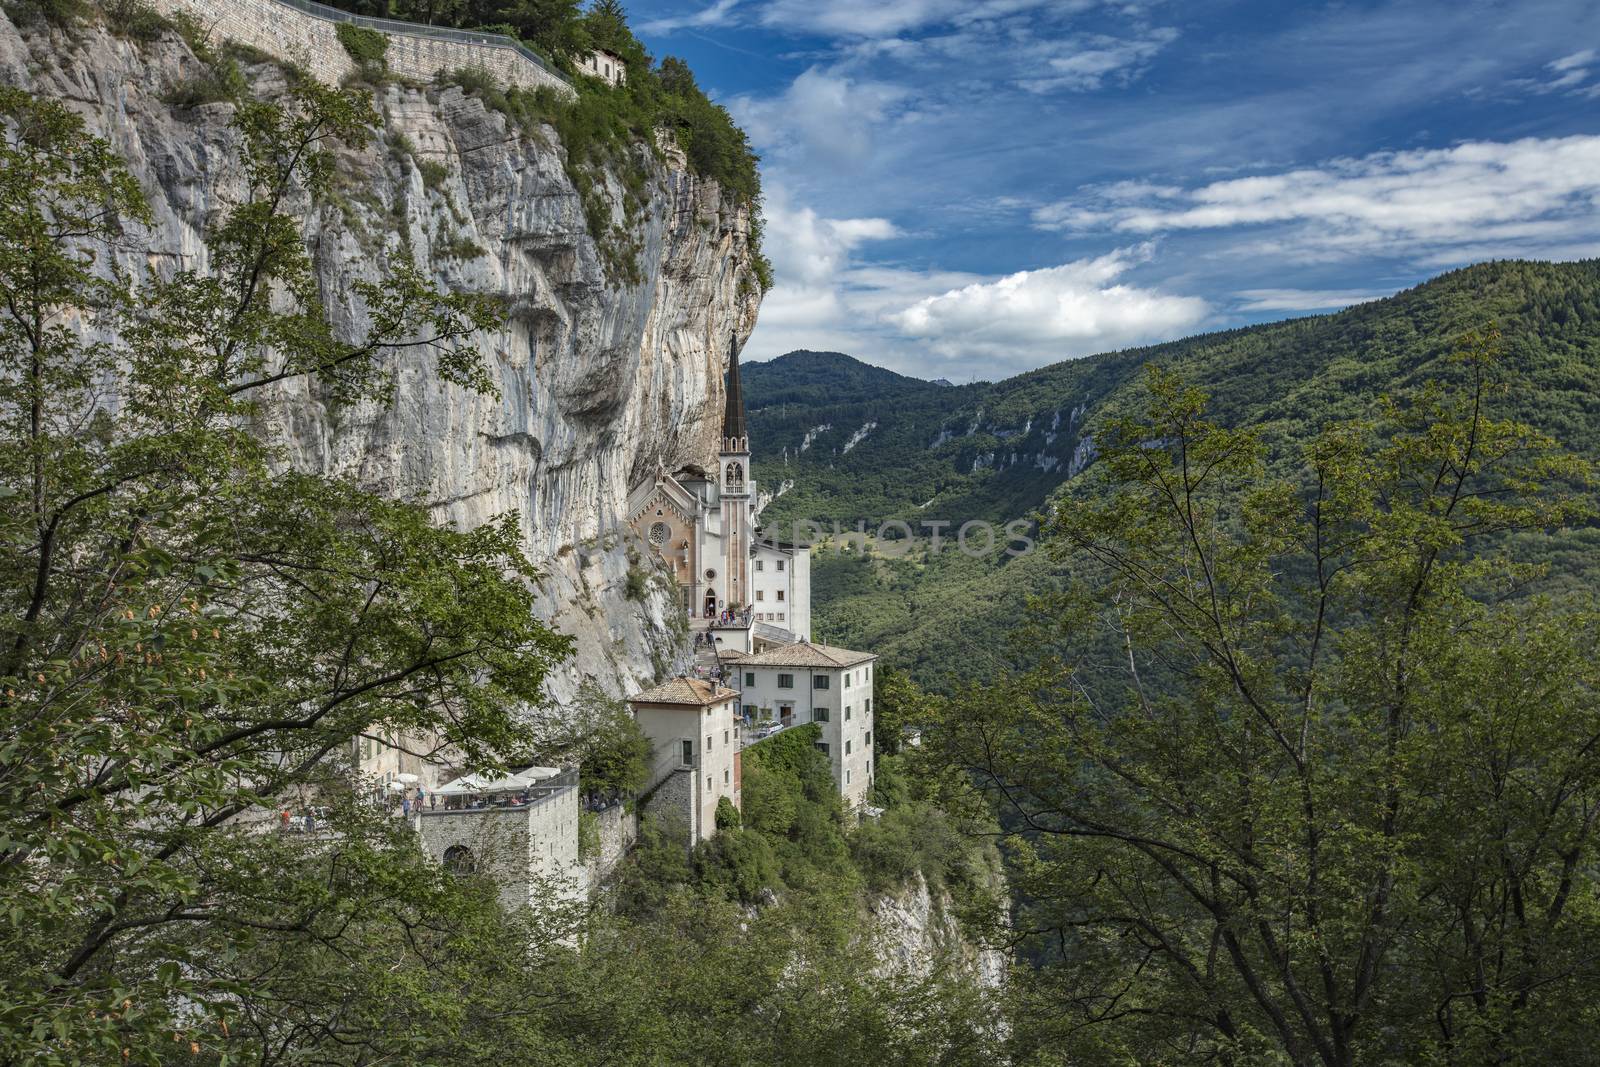 Spiazzi, Italy, Europe, August 2019, The Sanctuary of Madonna della Corona Church